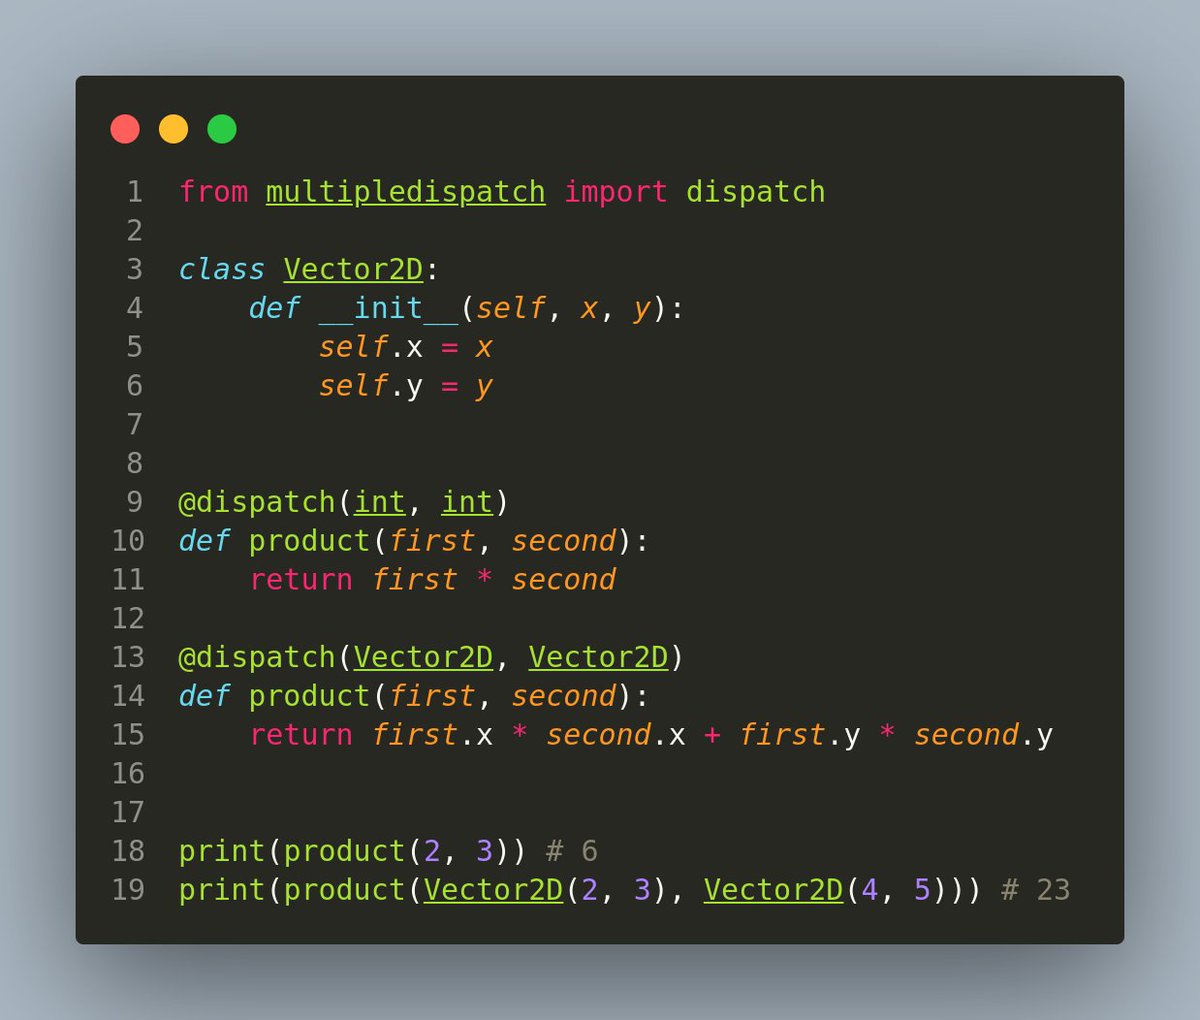 Did you know Python mimics the multiple dispatch behavior of Julia through the `multipledispatch` decorator?

#Python #JuliaLang @JuliaLanguage